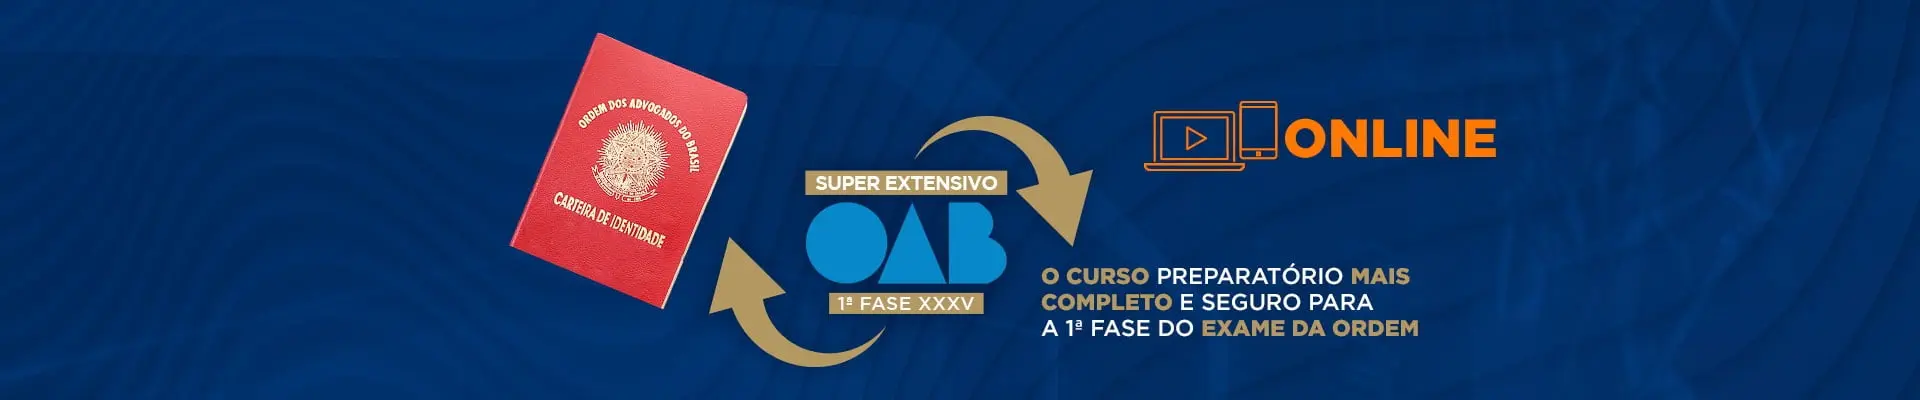 Super Extensivo - OAB 1ª Fase XXXV Exame - Online